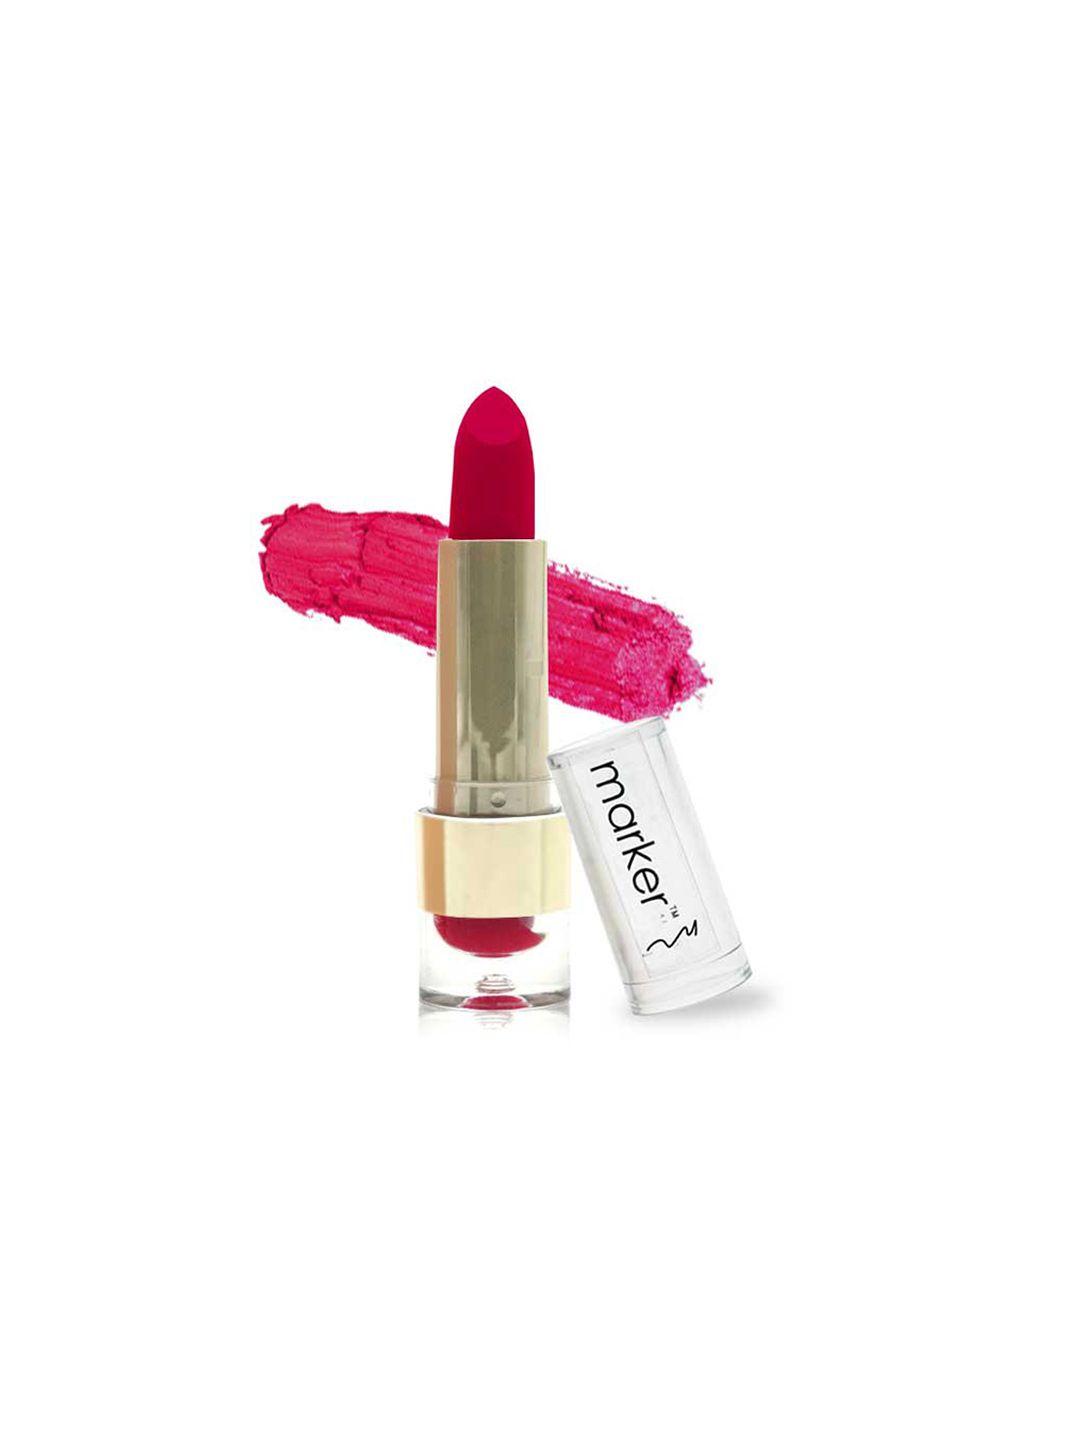 beautyrelay london xplore hd matte lipstick with vitamin e 3.5 g -pink kiss